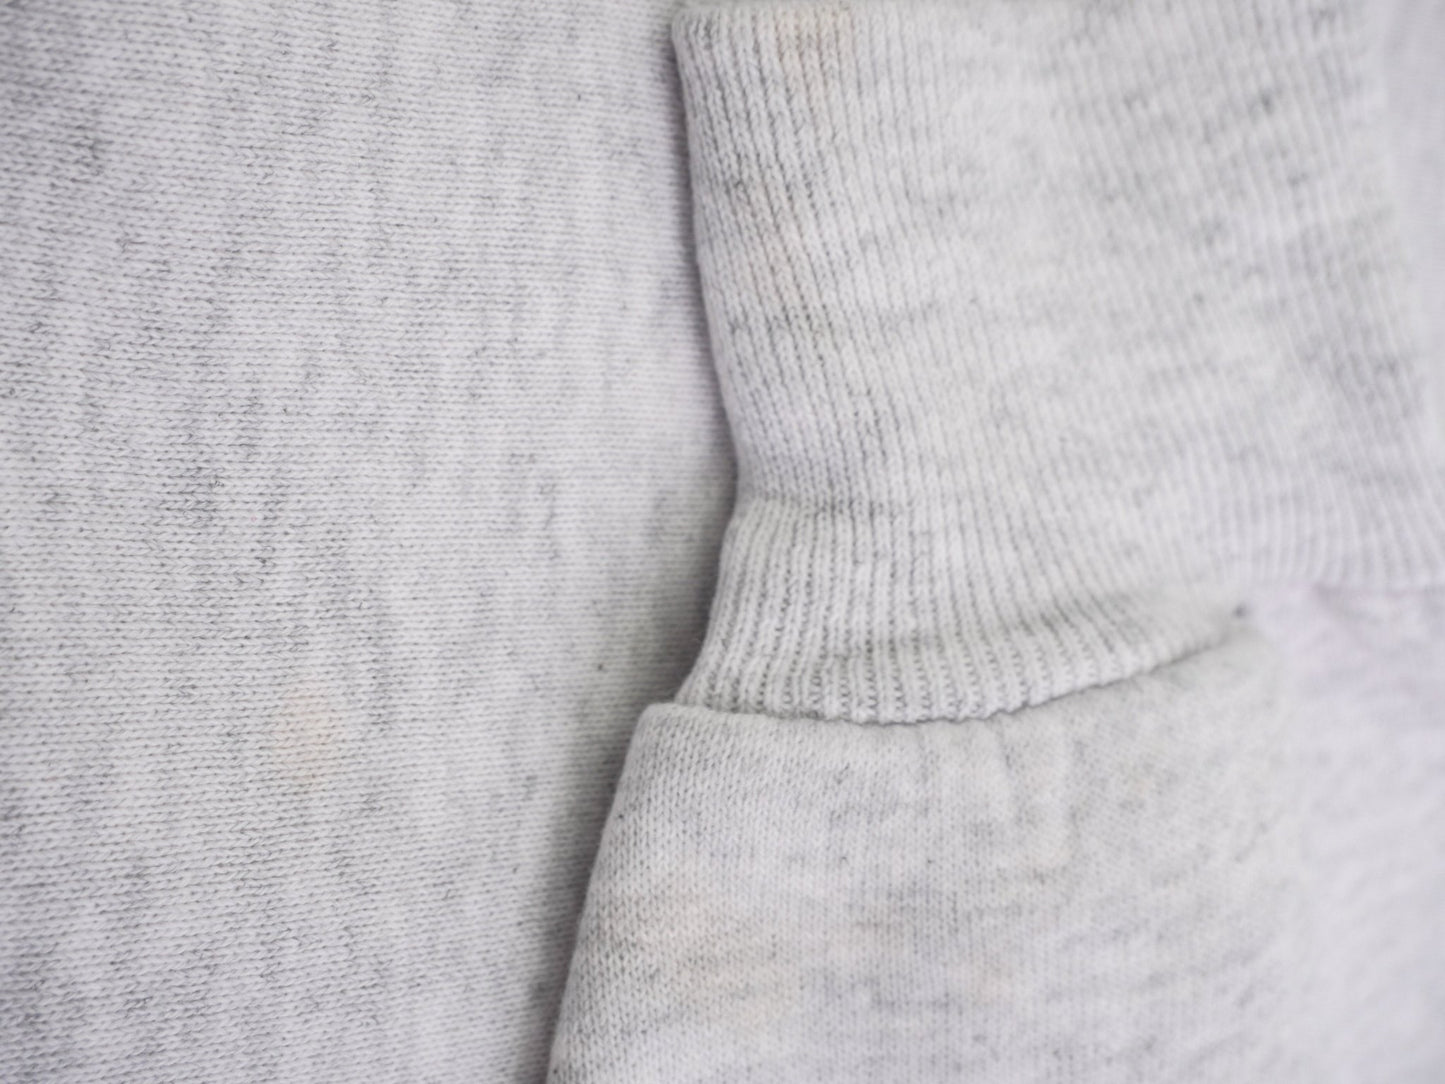 Chicken printed grey Sweater - Peeces